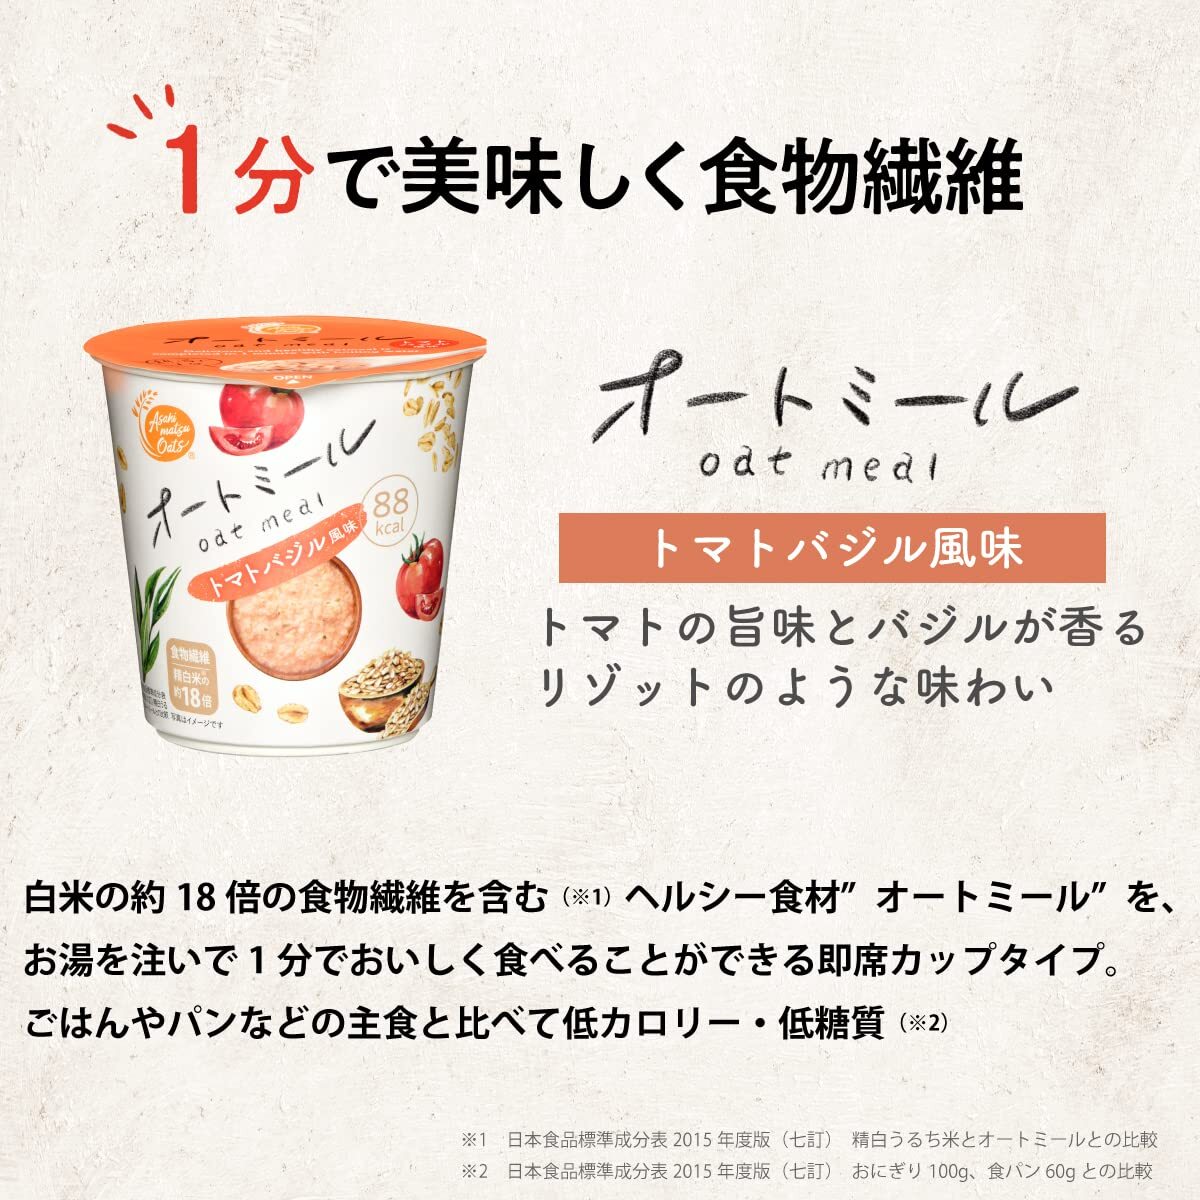  asahi pine food auto mi-ru tomato basil manner taste 29g×12 piece 